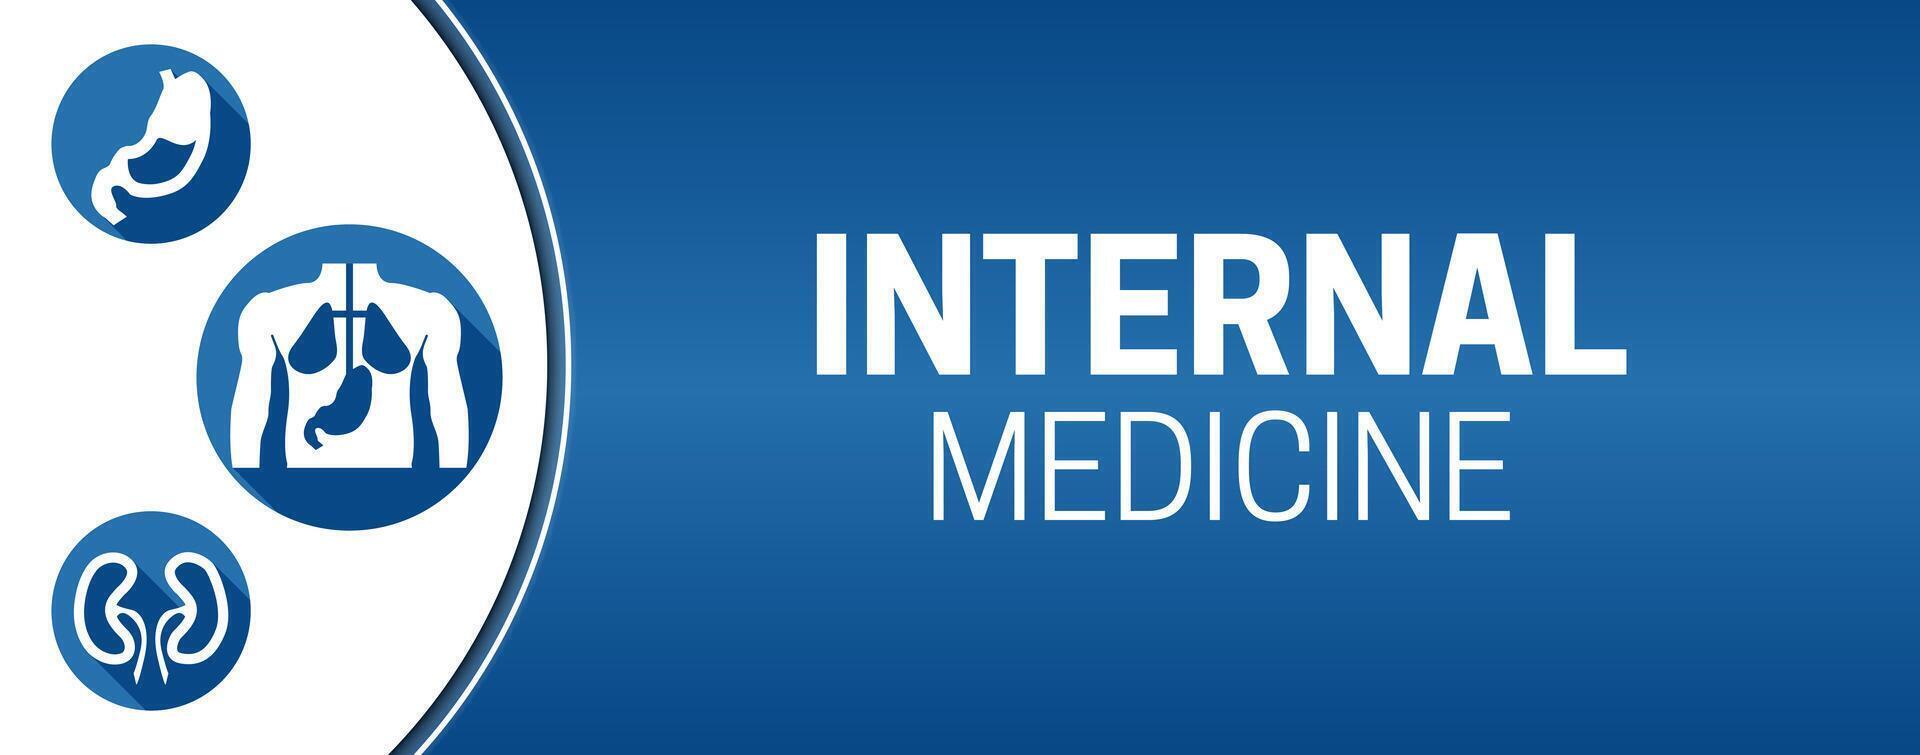 azul interno medicina ilustración antecedentes bandera vector